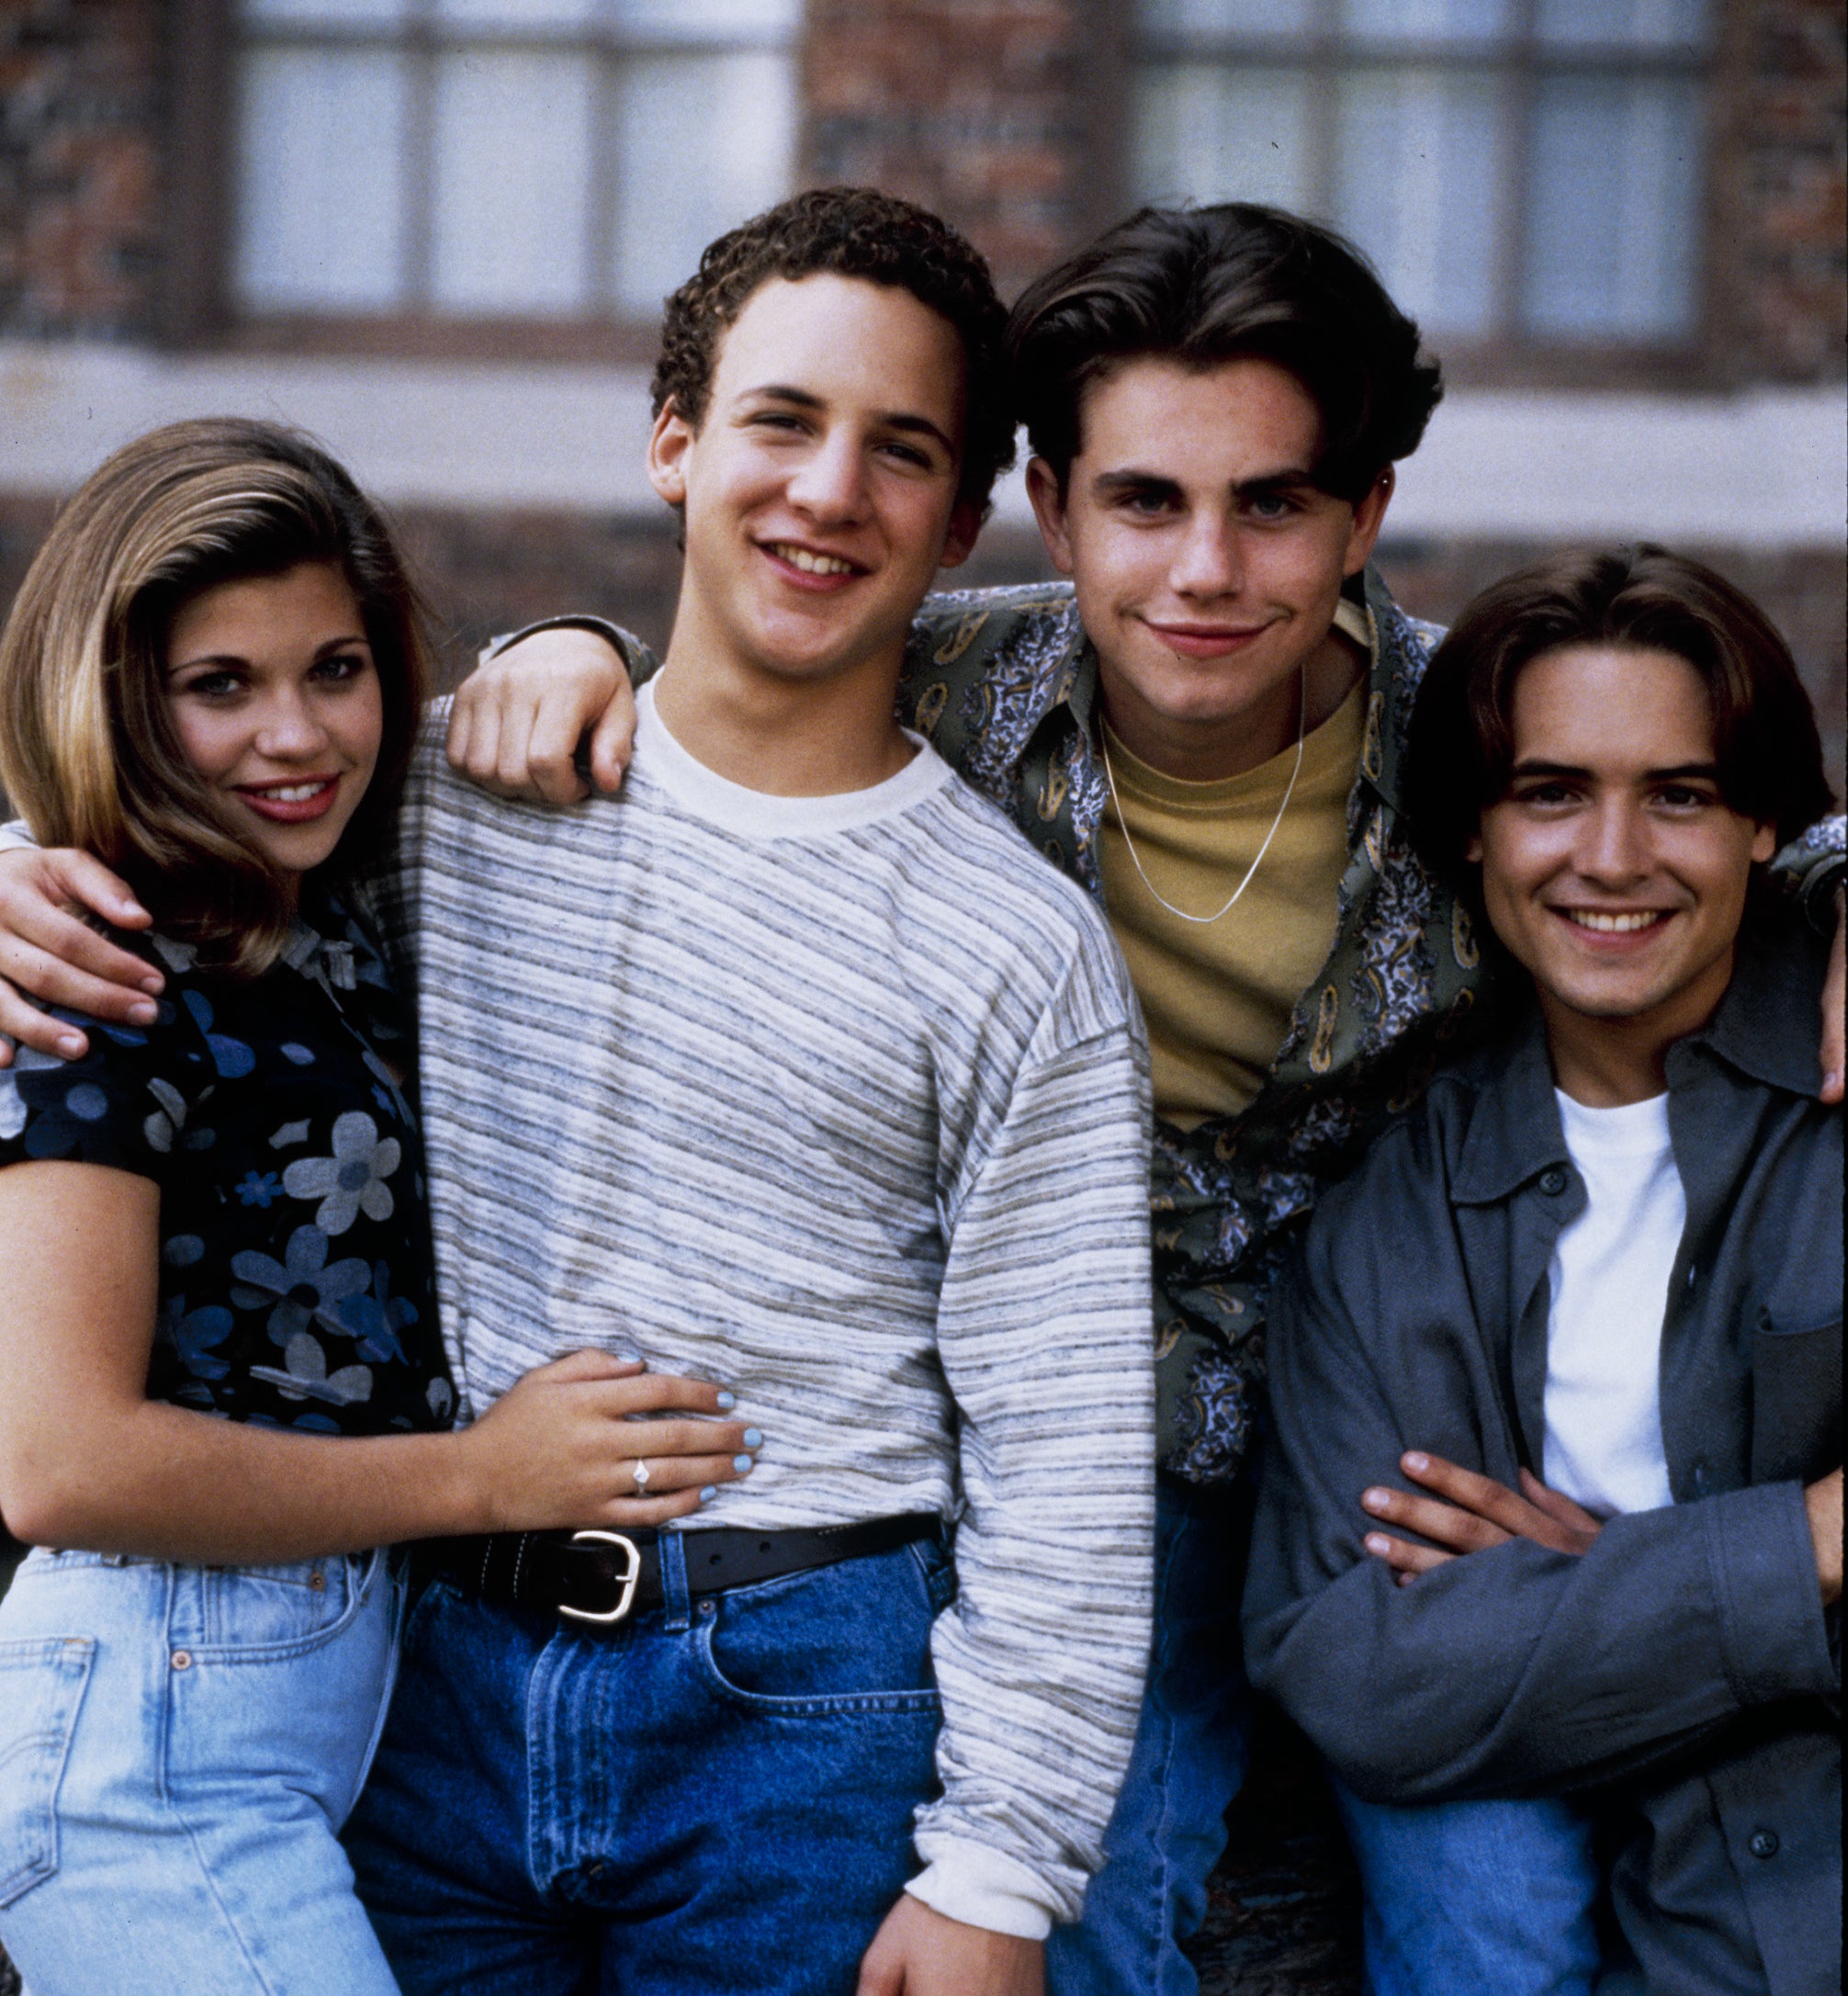 Boy Meets World cast in 1996